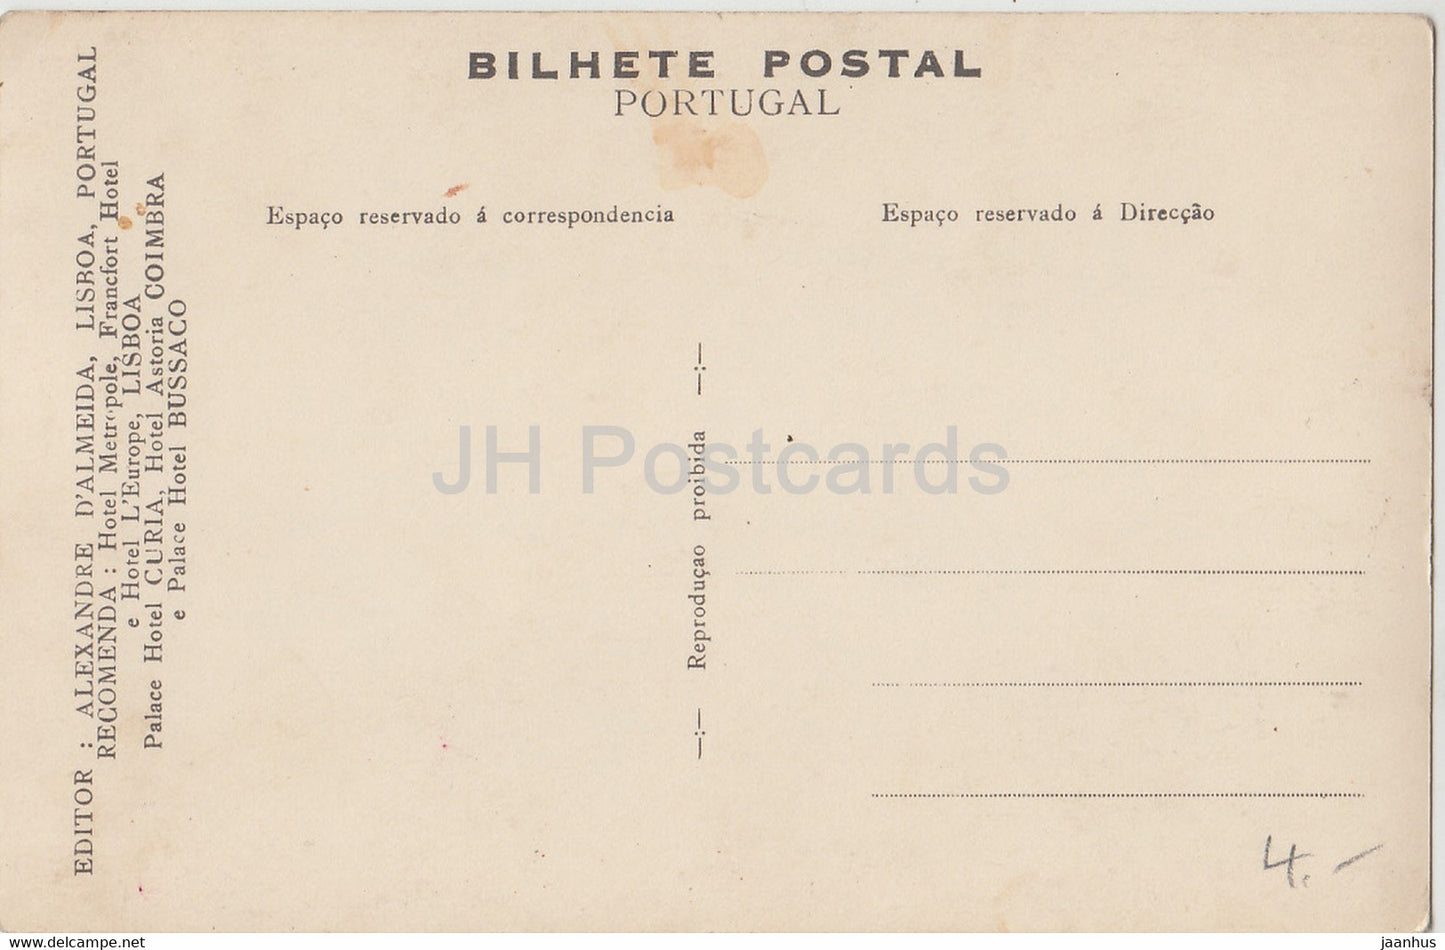 Bussaco - Floresta e Palace Hotel - 47 - alte Postkarte - Portugal - unbenutzt